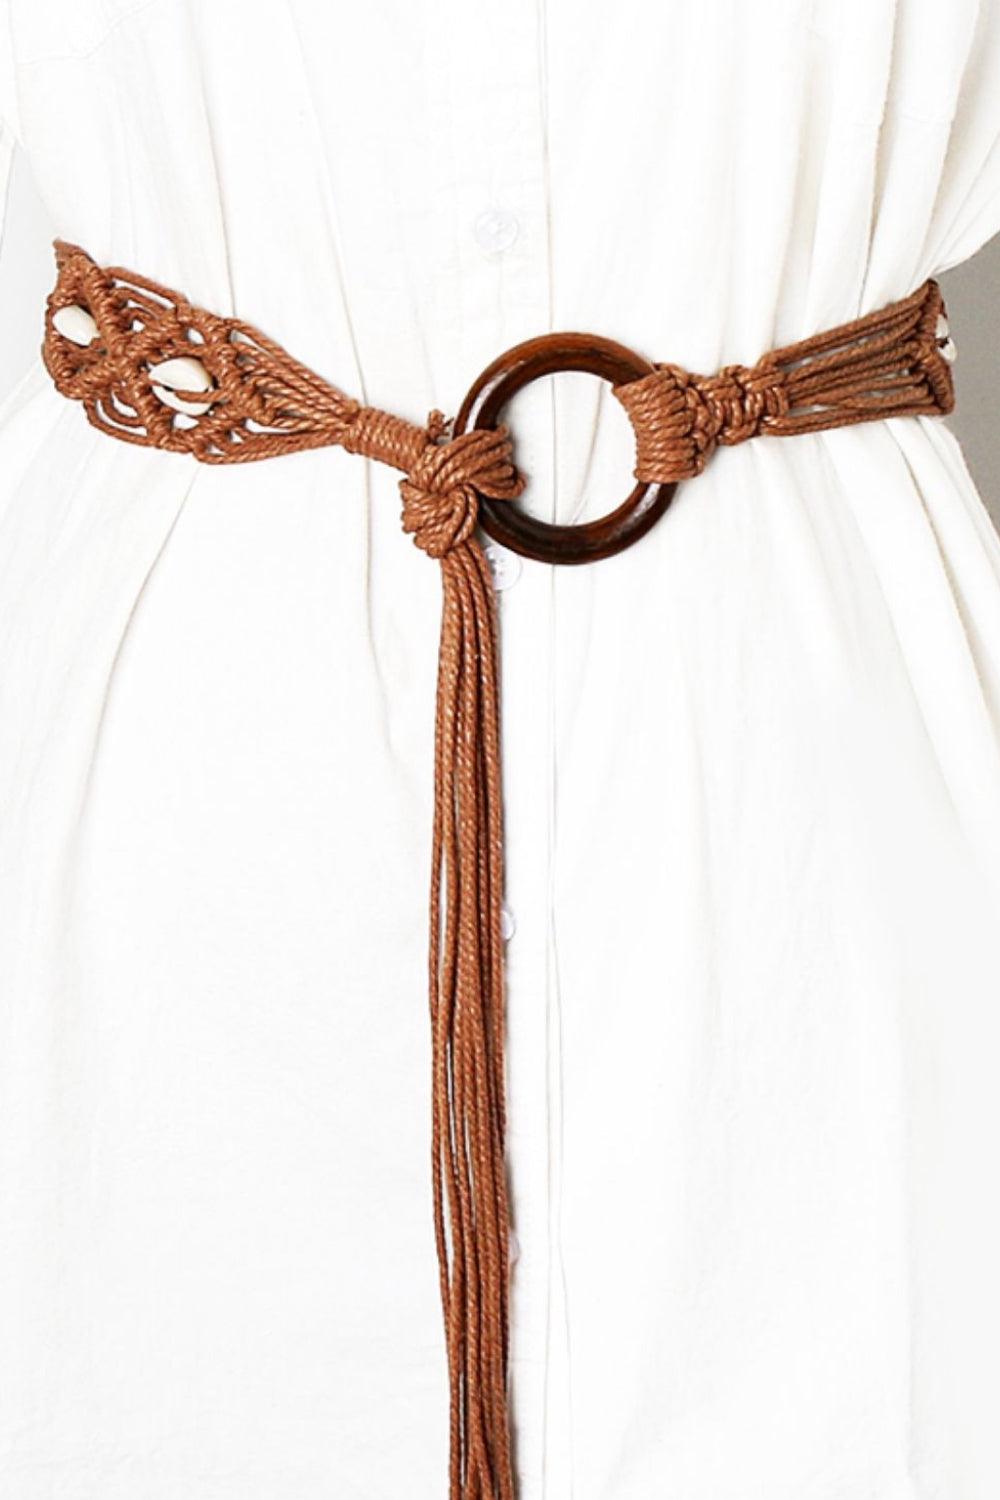 Bohemian Wood Ring Braid Belt - Lab Fashion, Home & Health